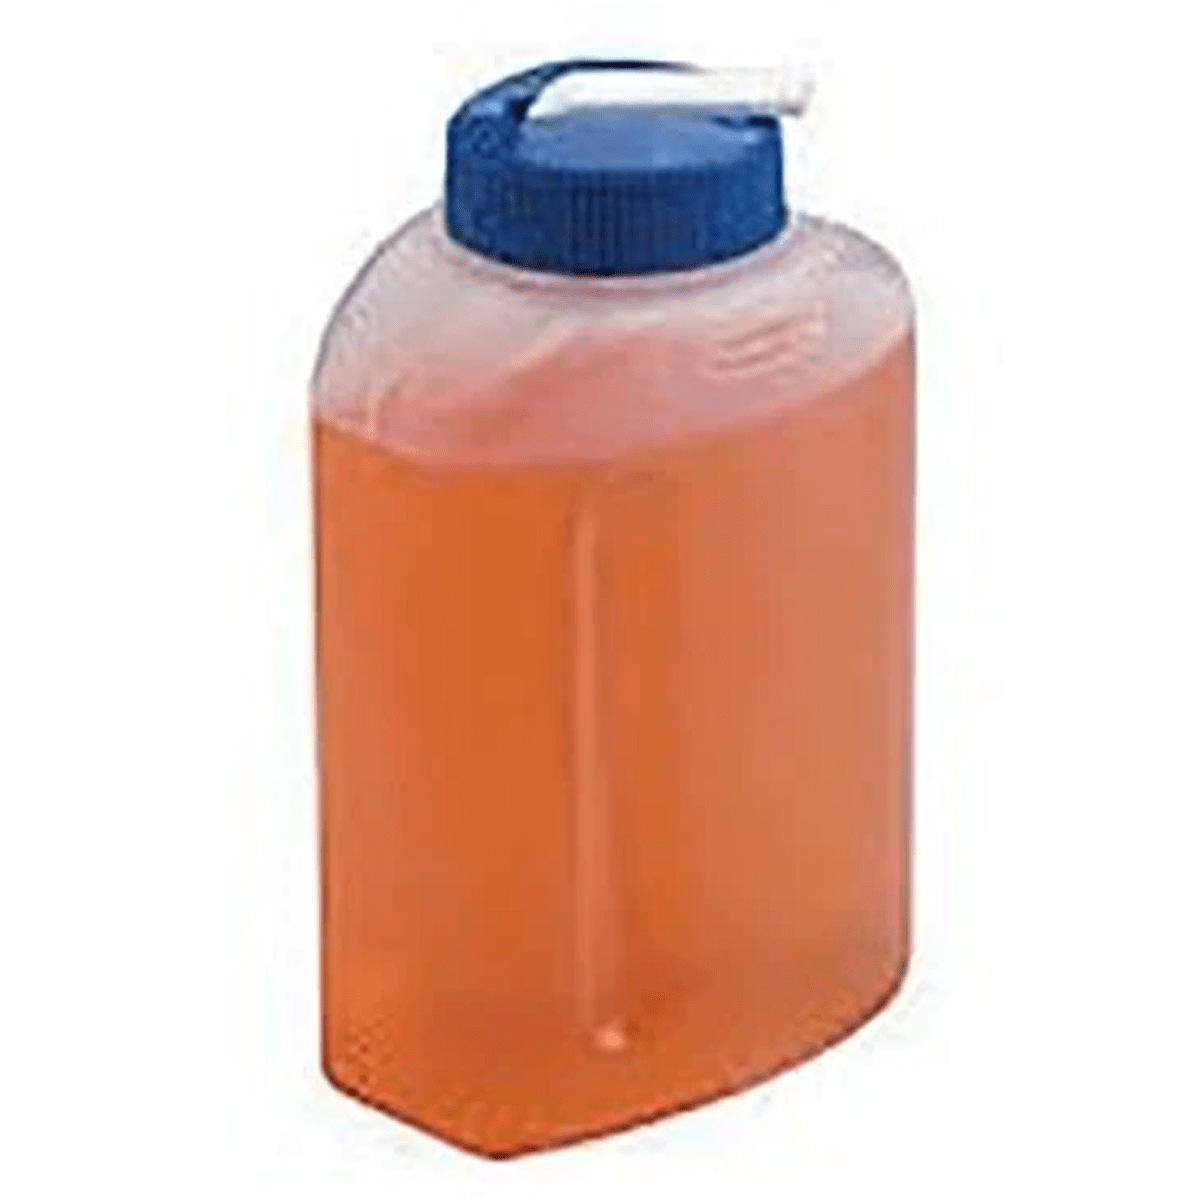 Rubbermaid Rubbermaid Litterless Juice Box 8.5 Oz